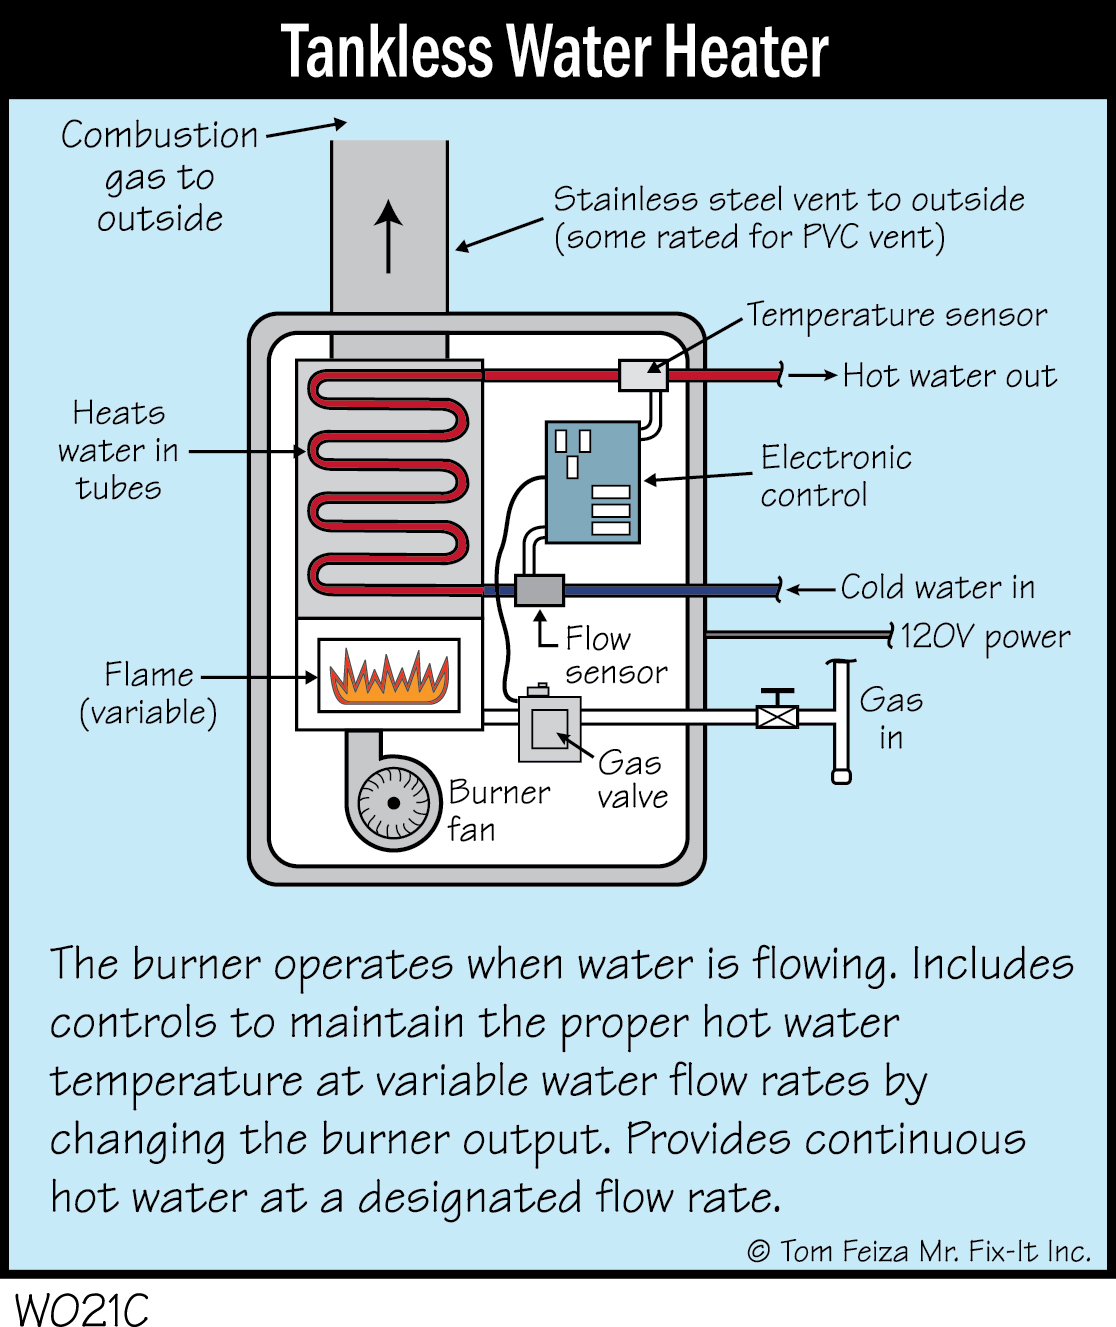 W021C - Tankless Water Heater